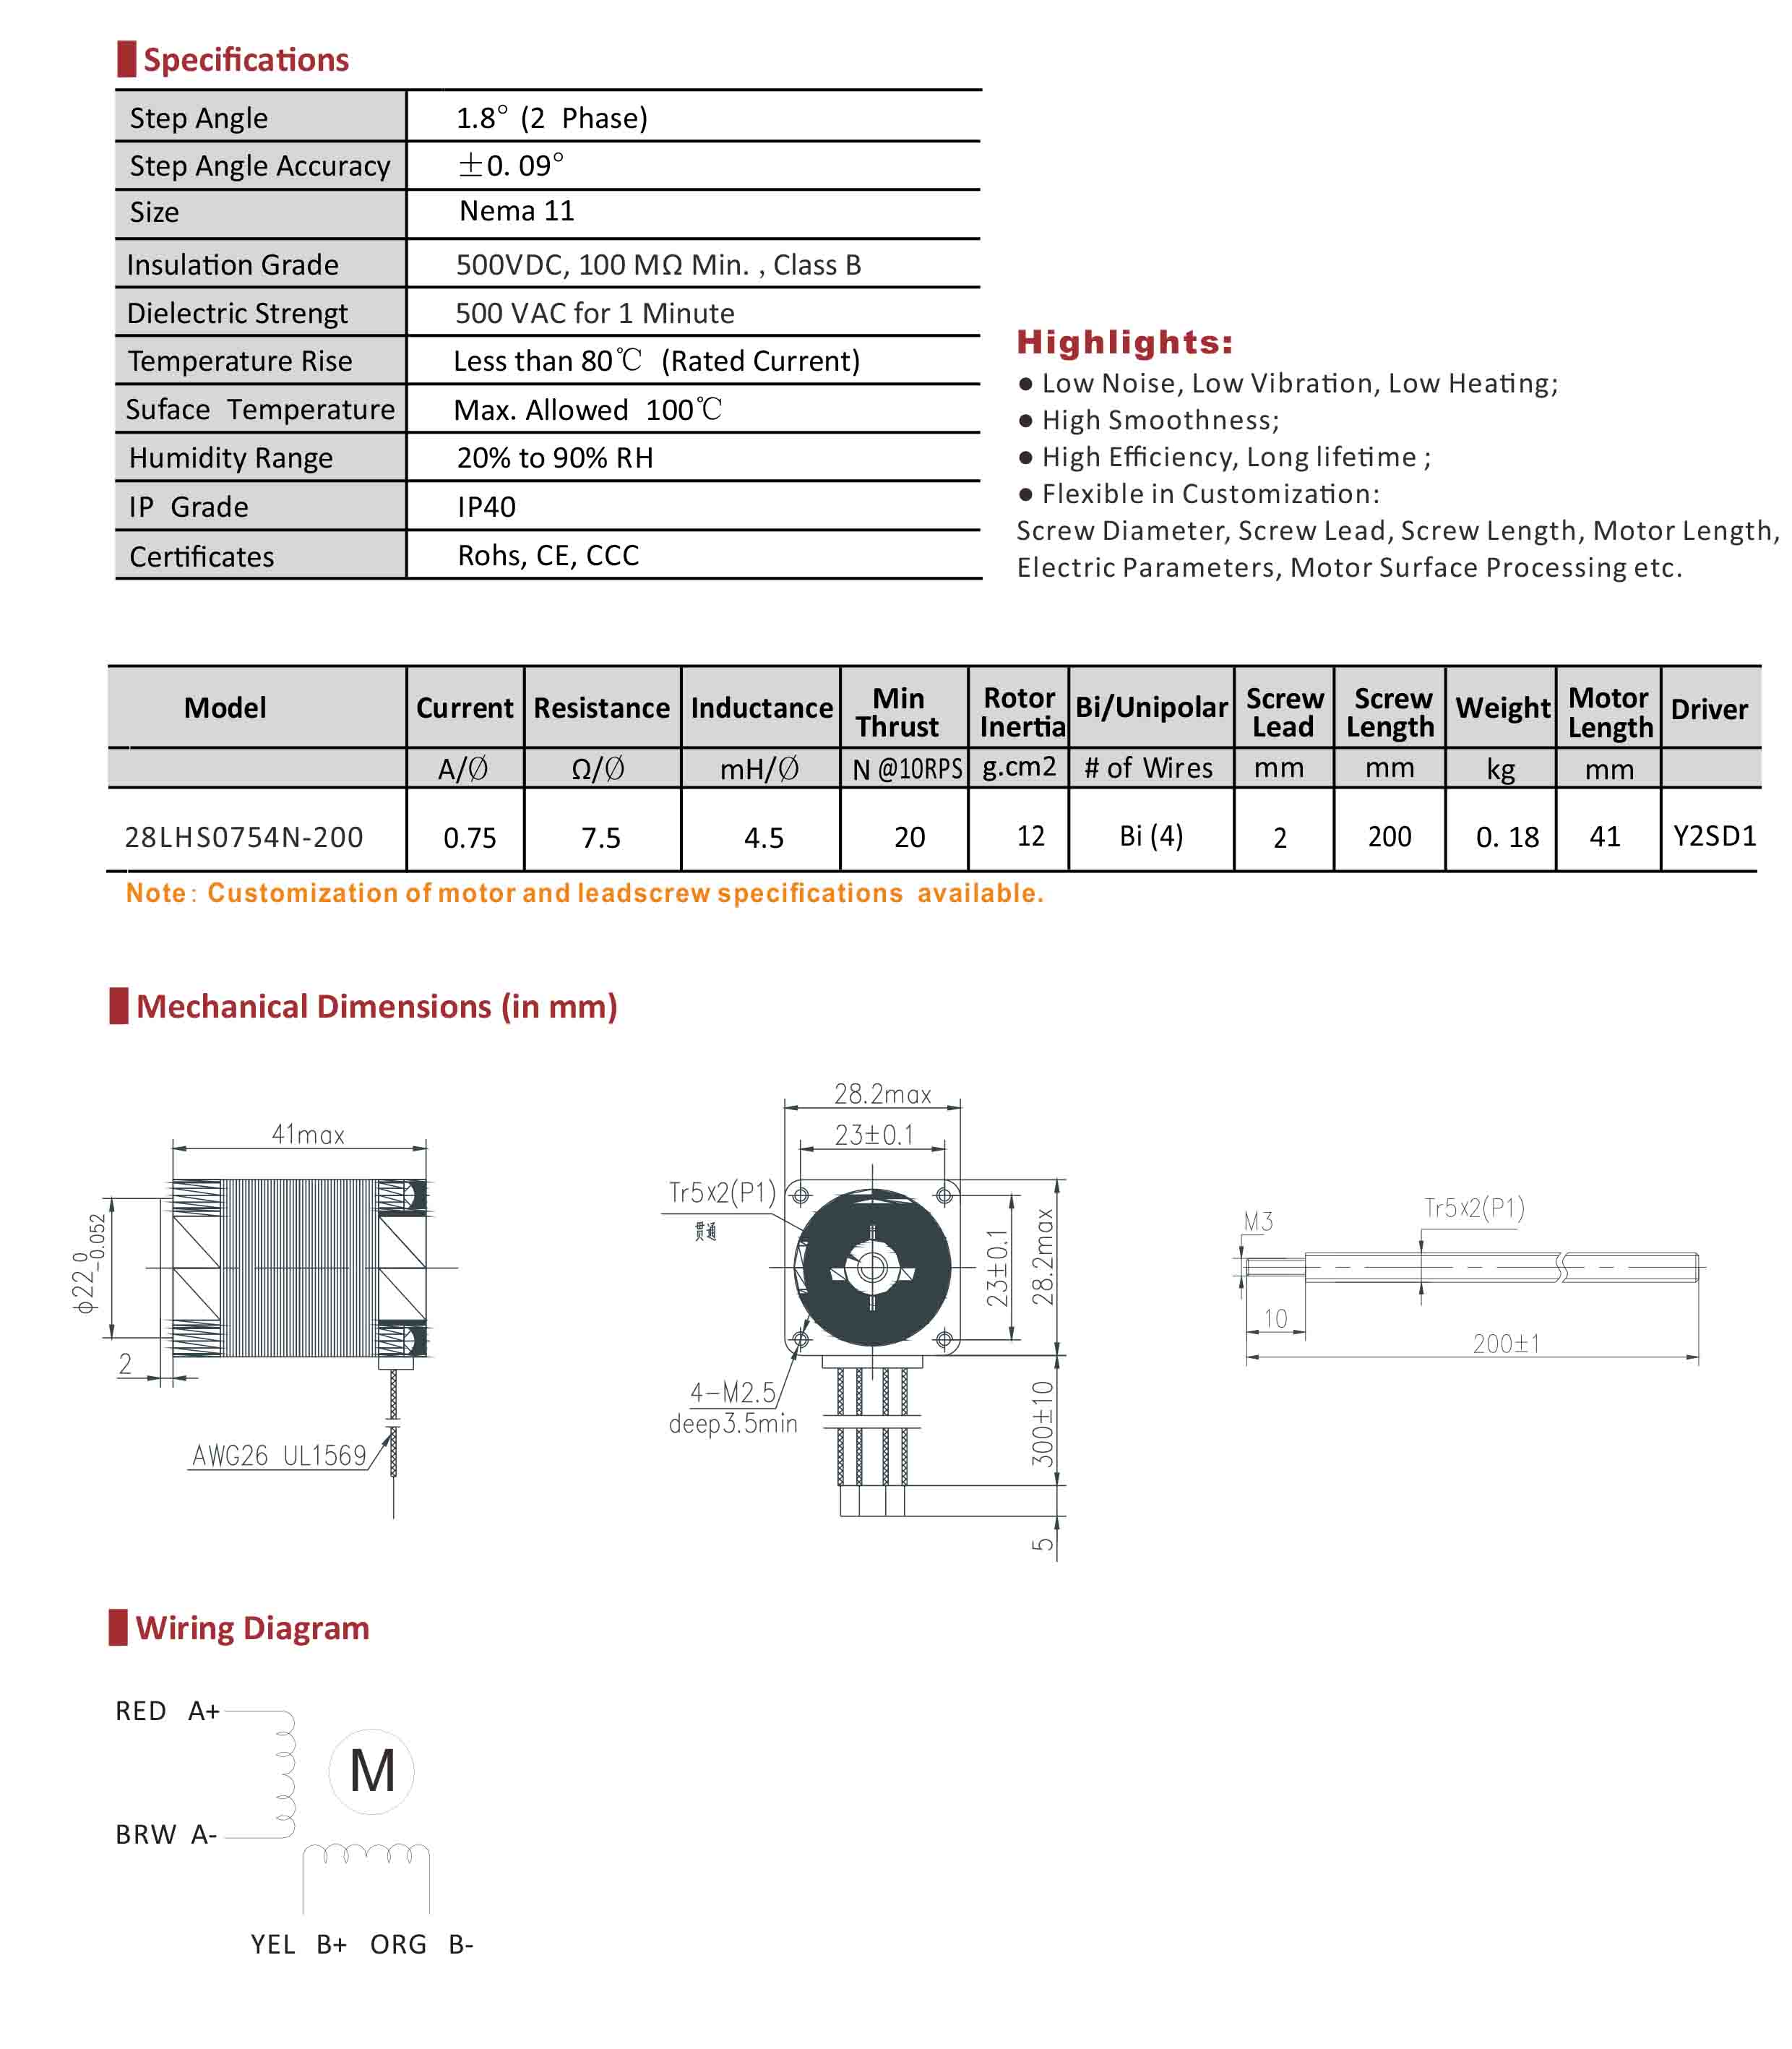 28LHS0754N-200 No-captive Linear Stepper Motor Data Sheet.jpg